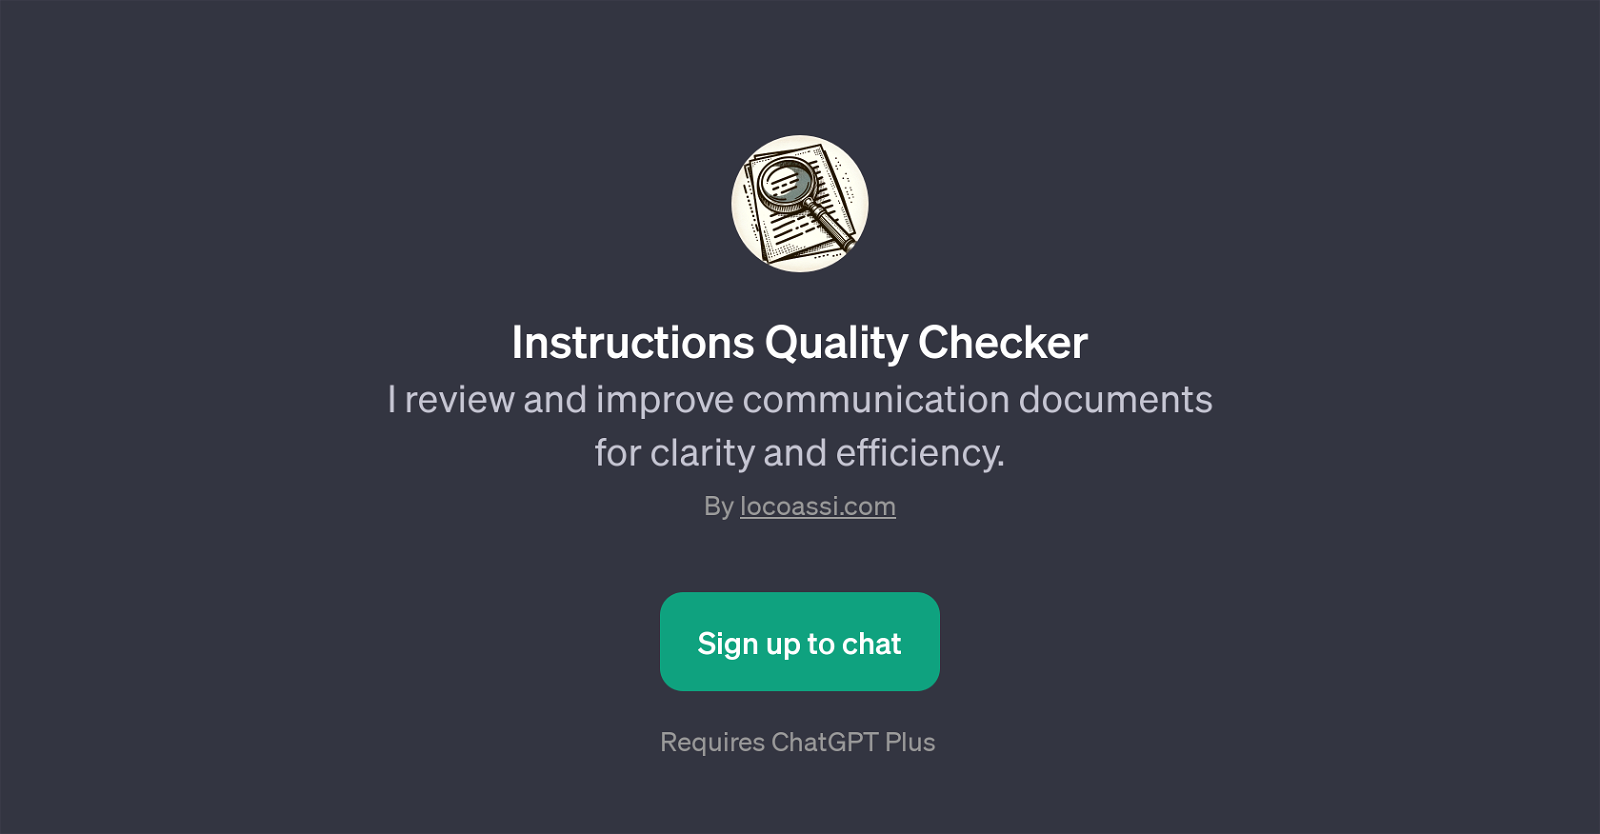 Instructions Quality Checker website